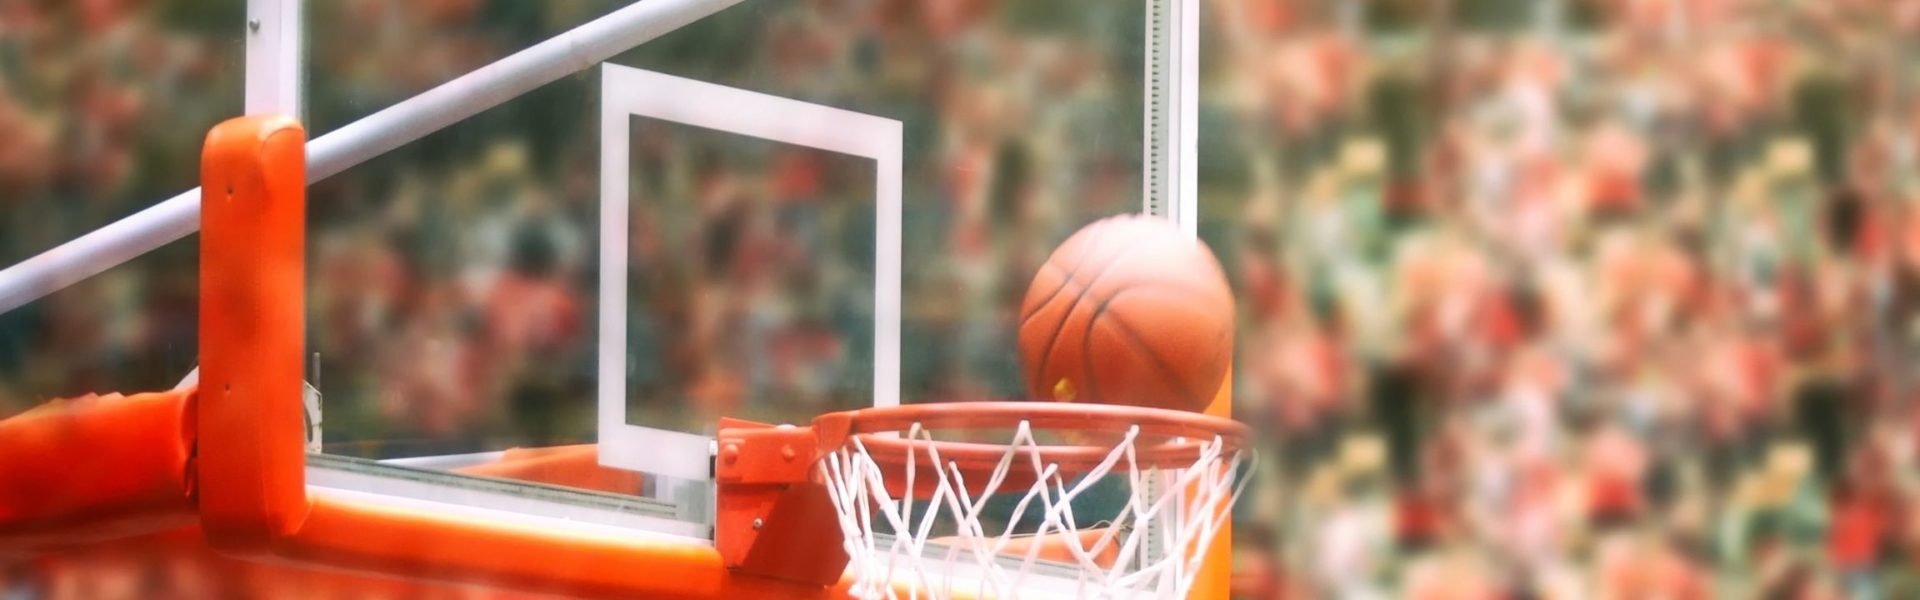 Basketball Event Case Study Header